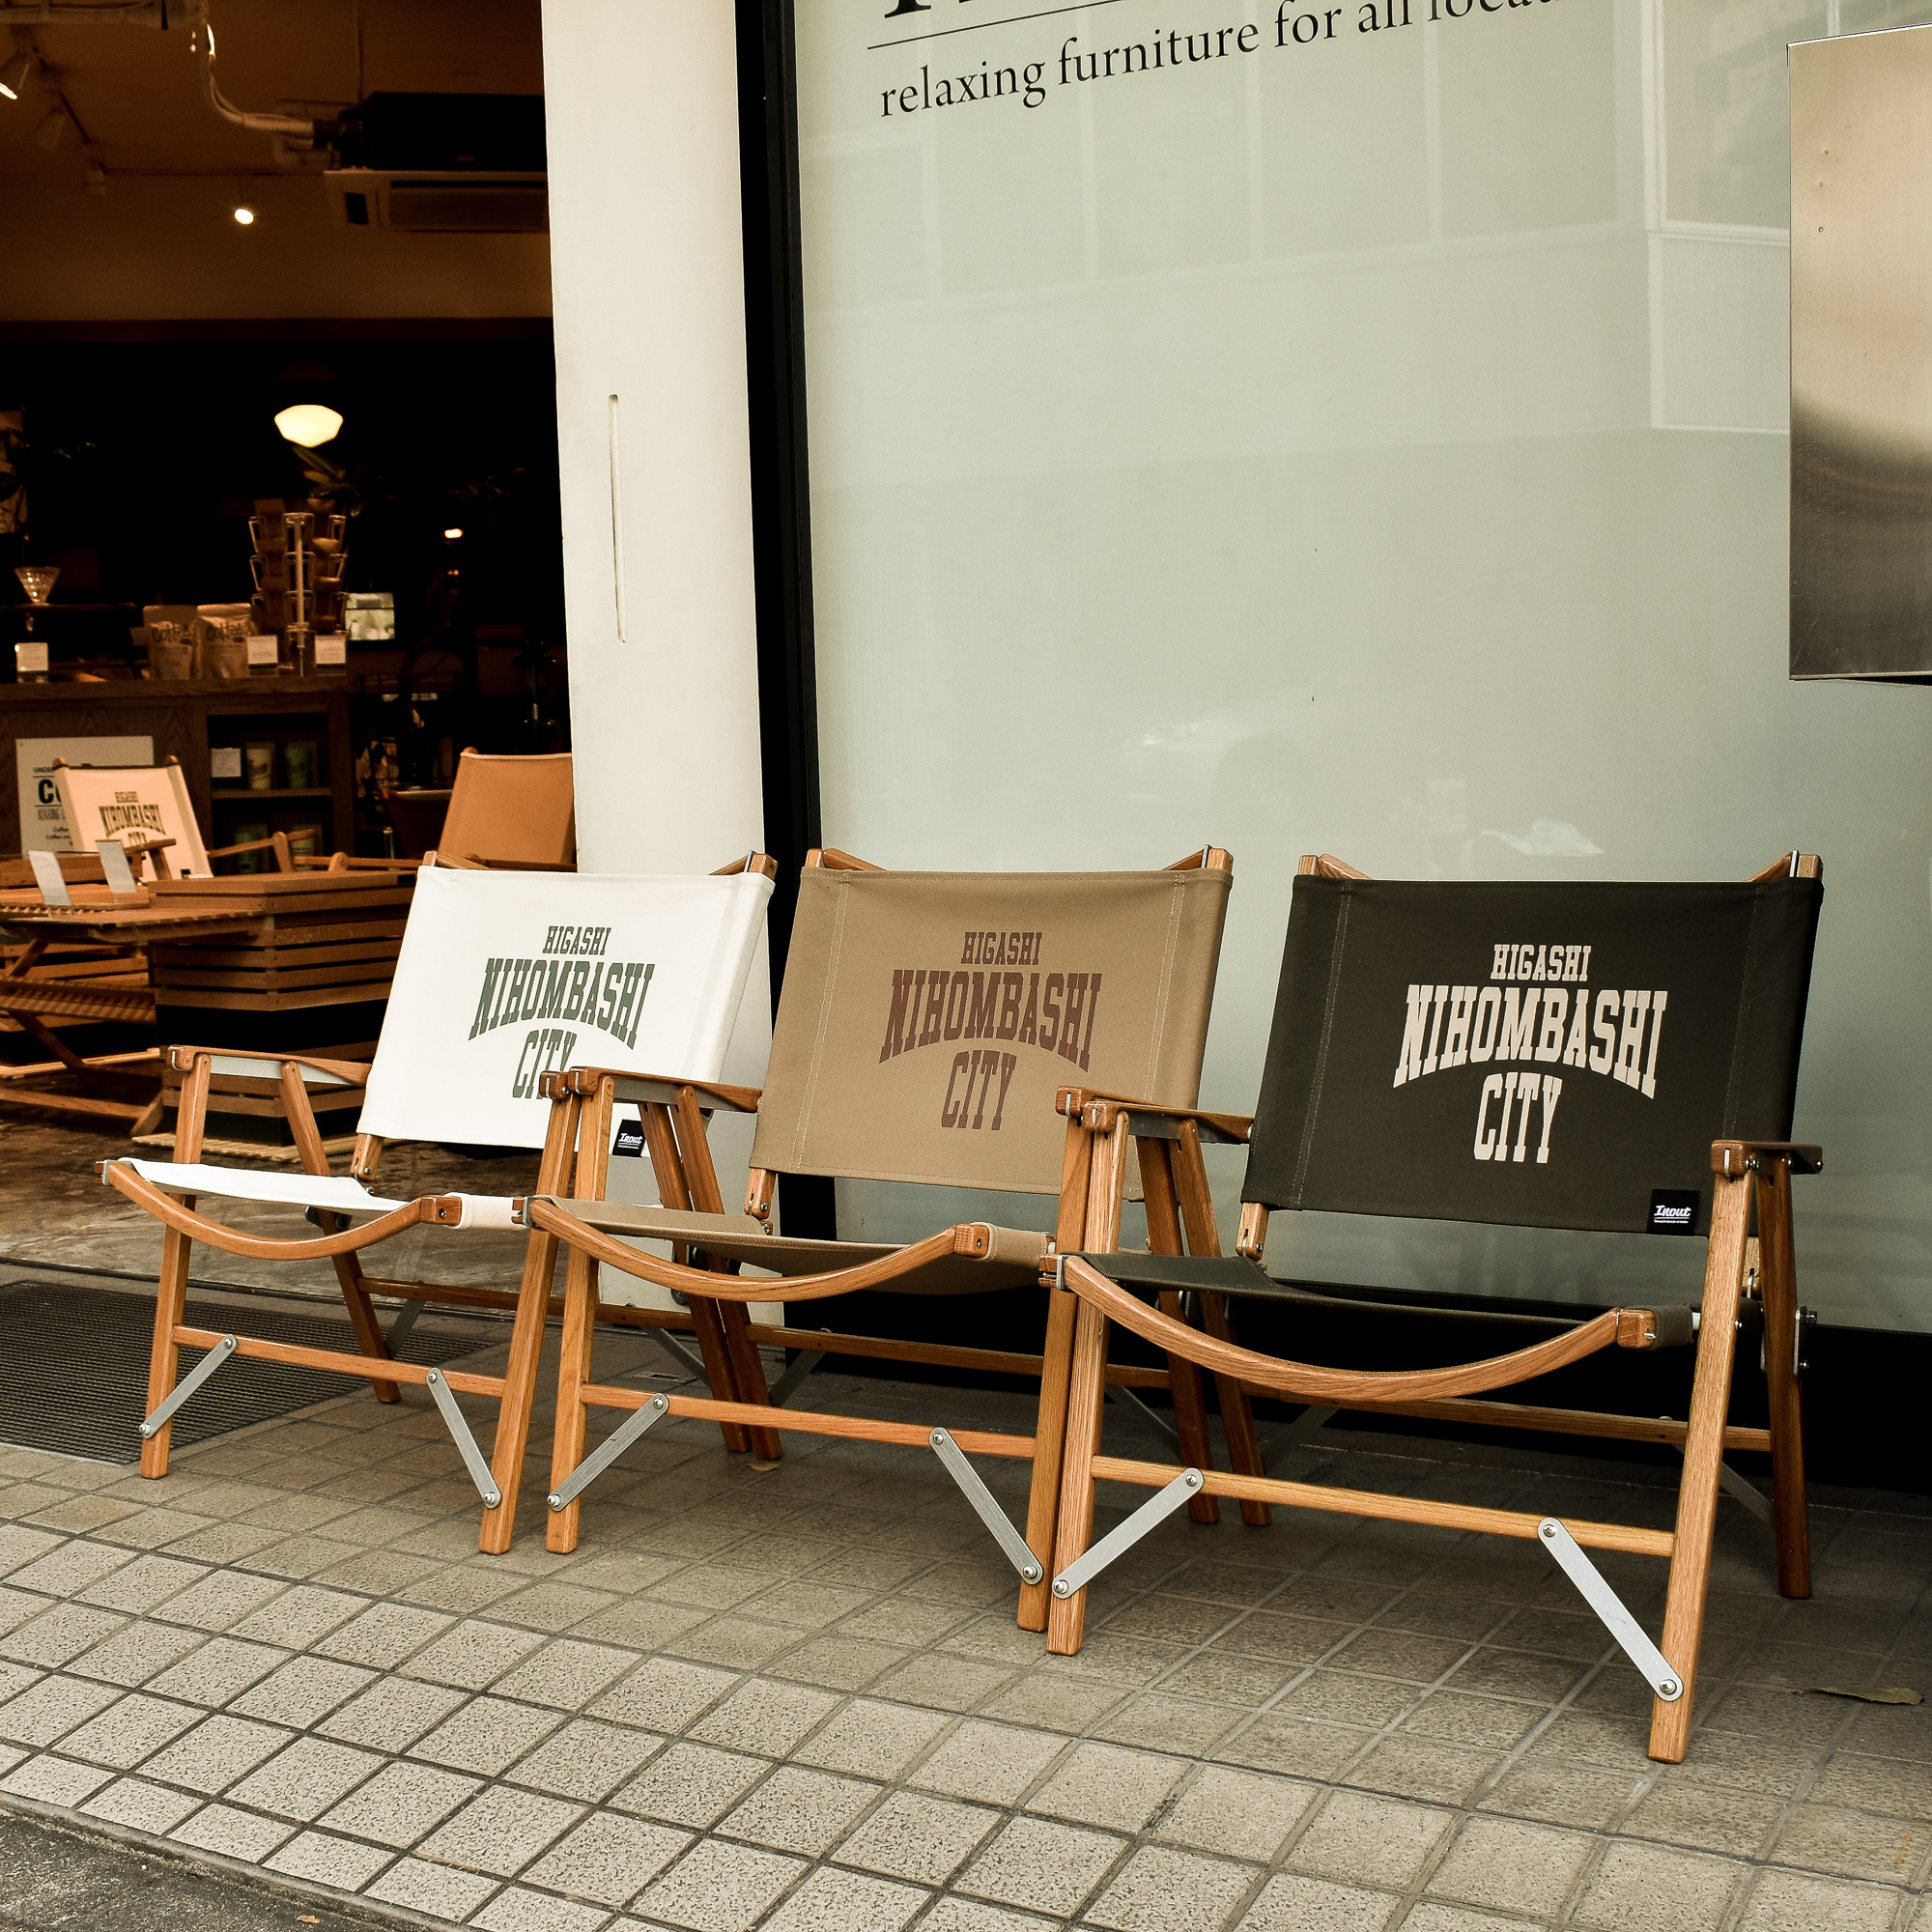 Kermit Chair INOUT Original Fabric "HIGASHI NIHOMBASHI CITY" Ver.